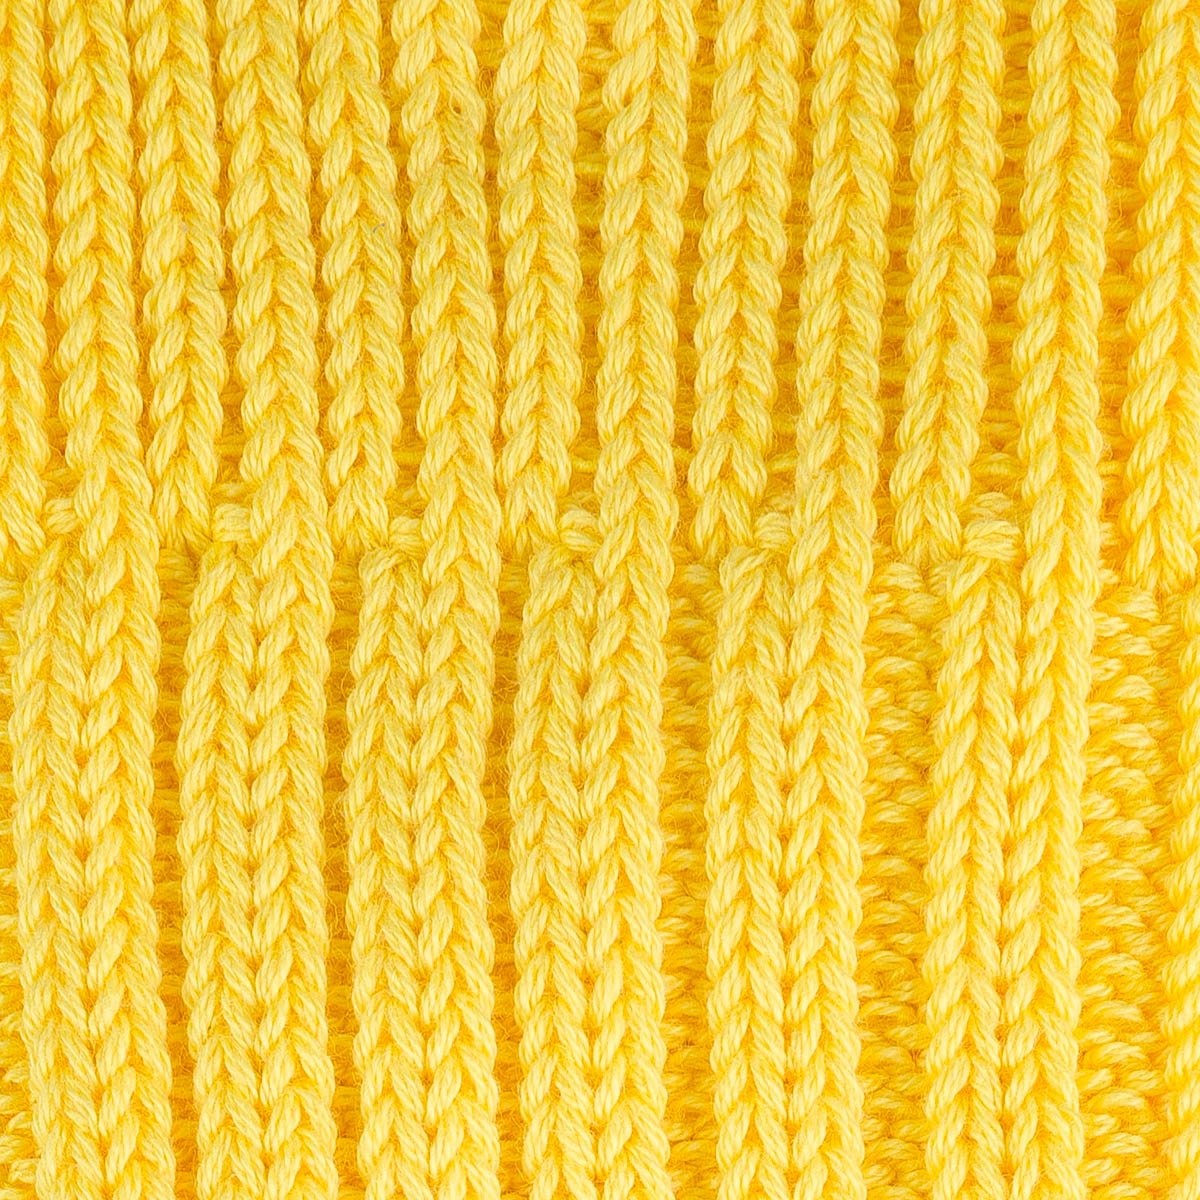 DEC-CAS-N-YEL Decka Cased Heavyweight Plain Socks - Neon Yellow - 3